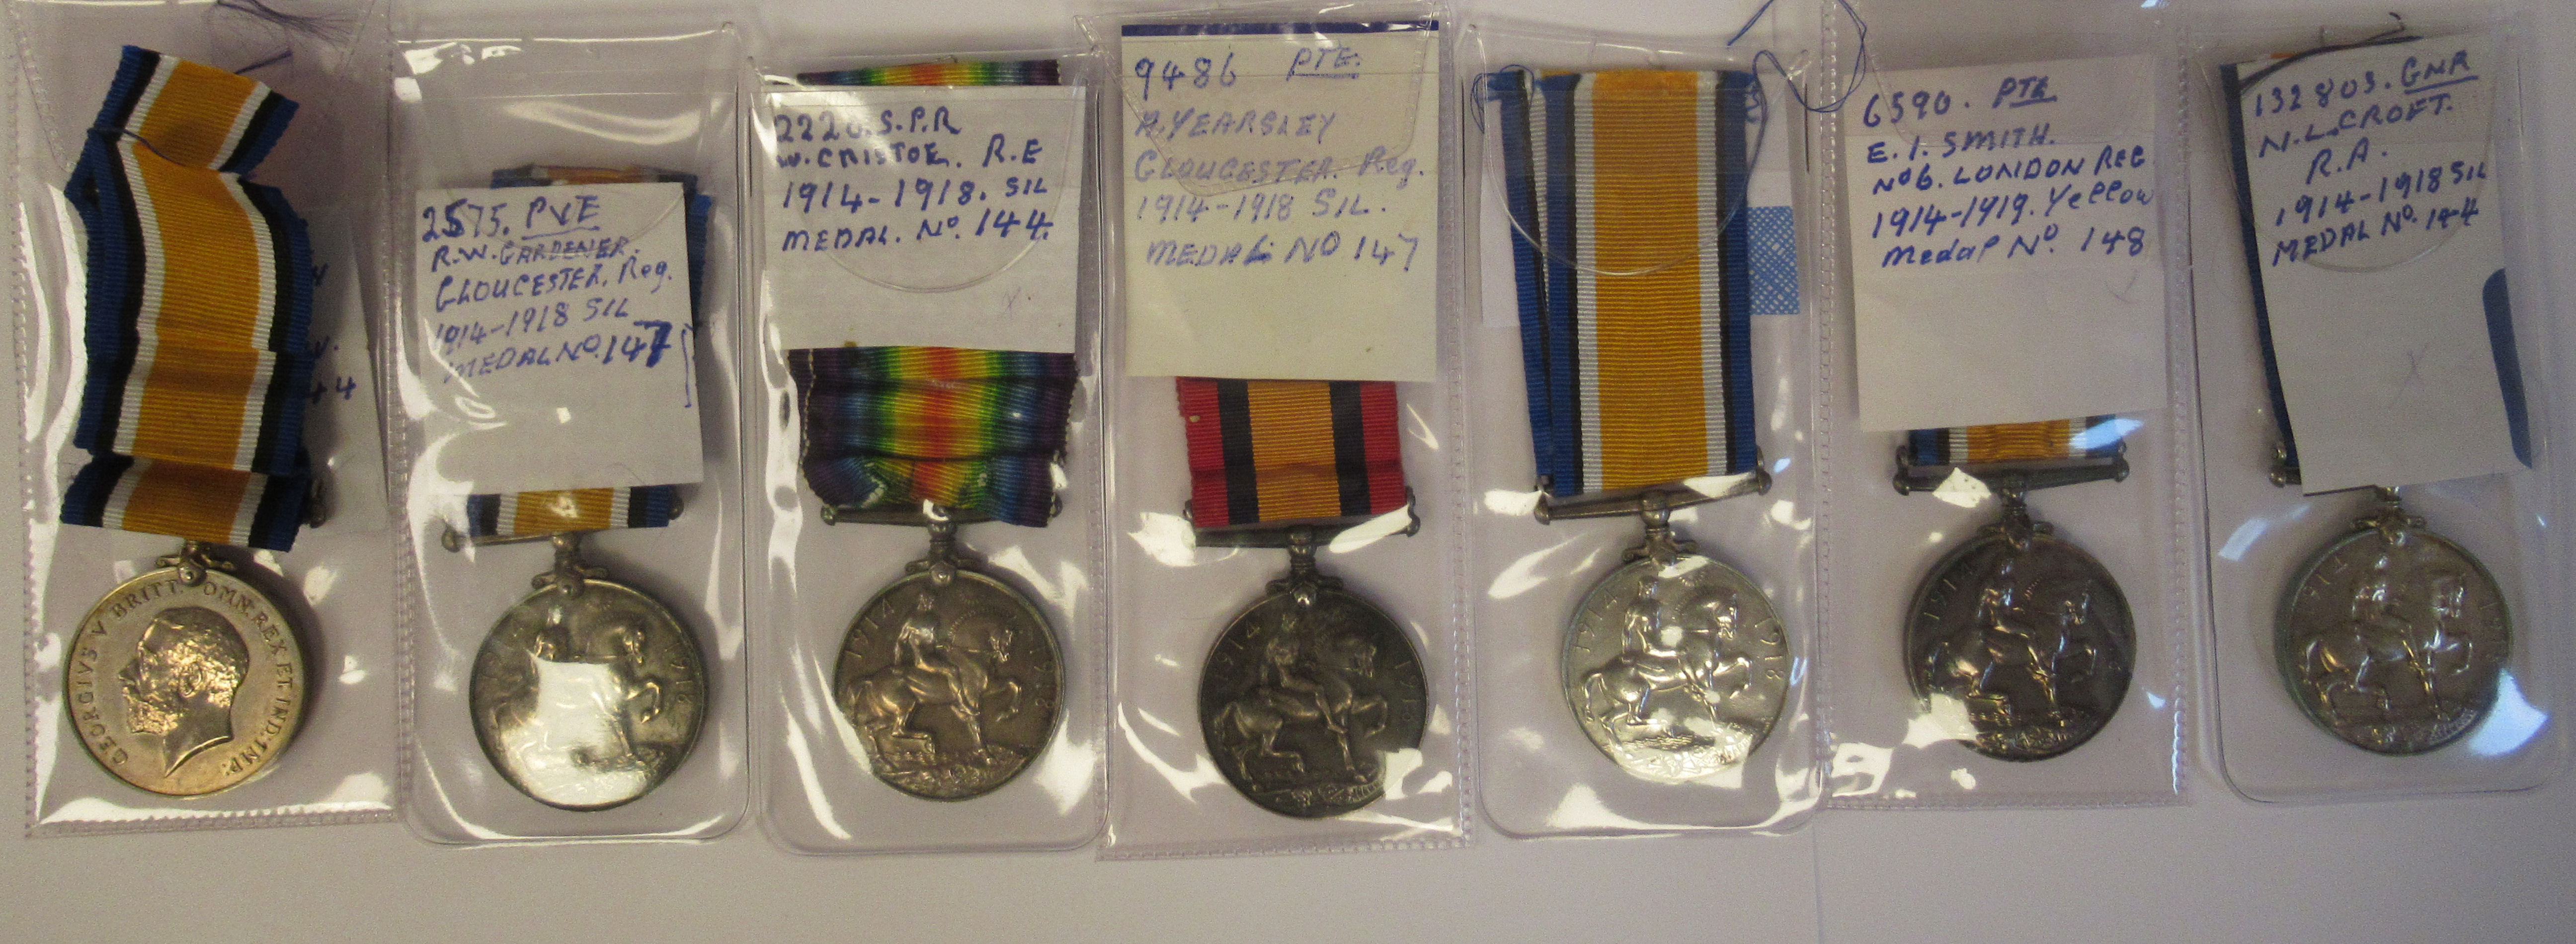 Twenty-four Great War 1914-1918 British service medals on ribbons, viz. 46481, Gnr. E. Williamson